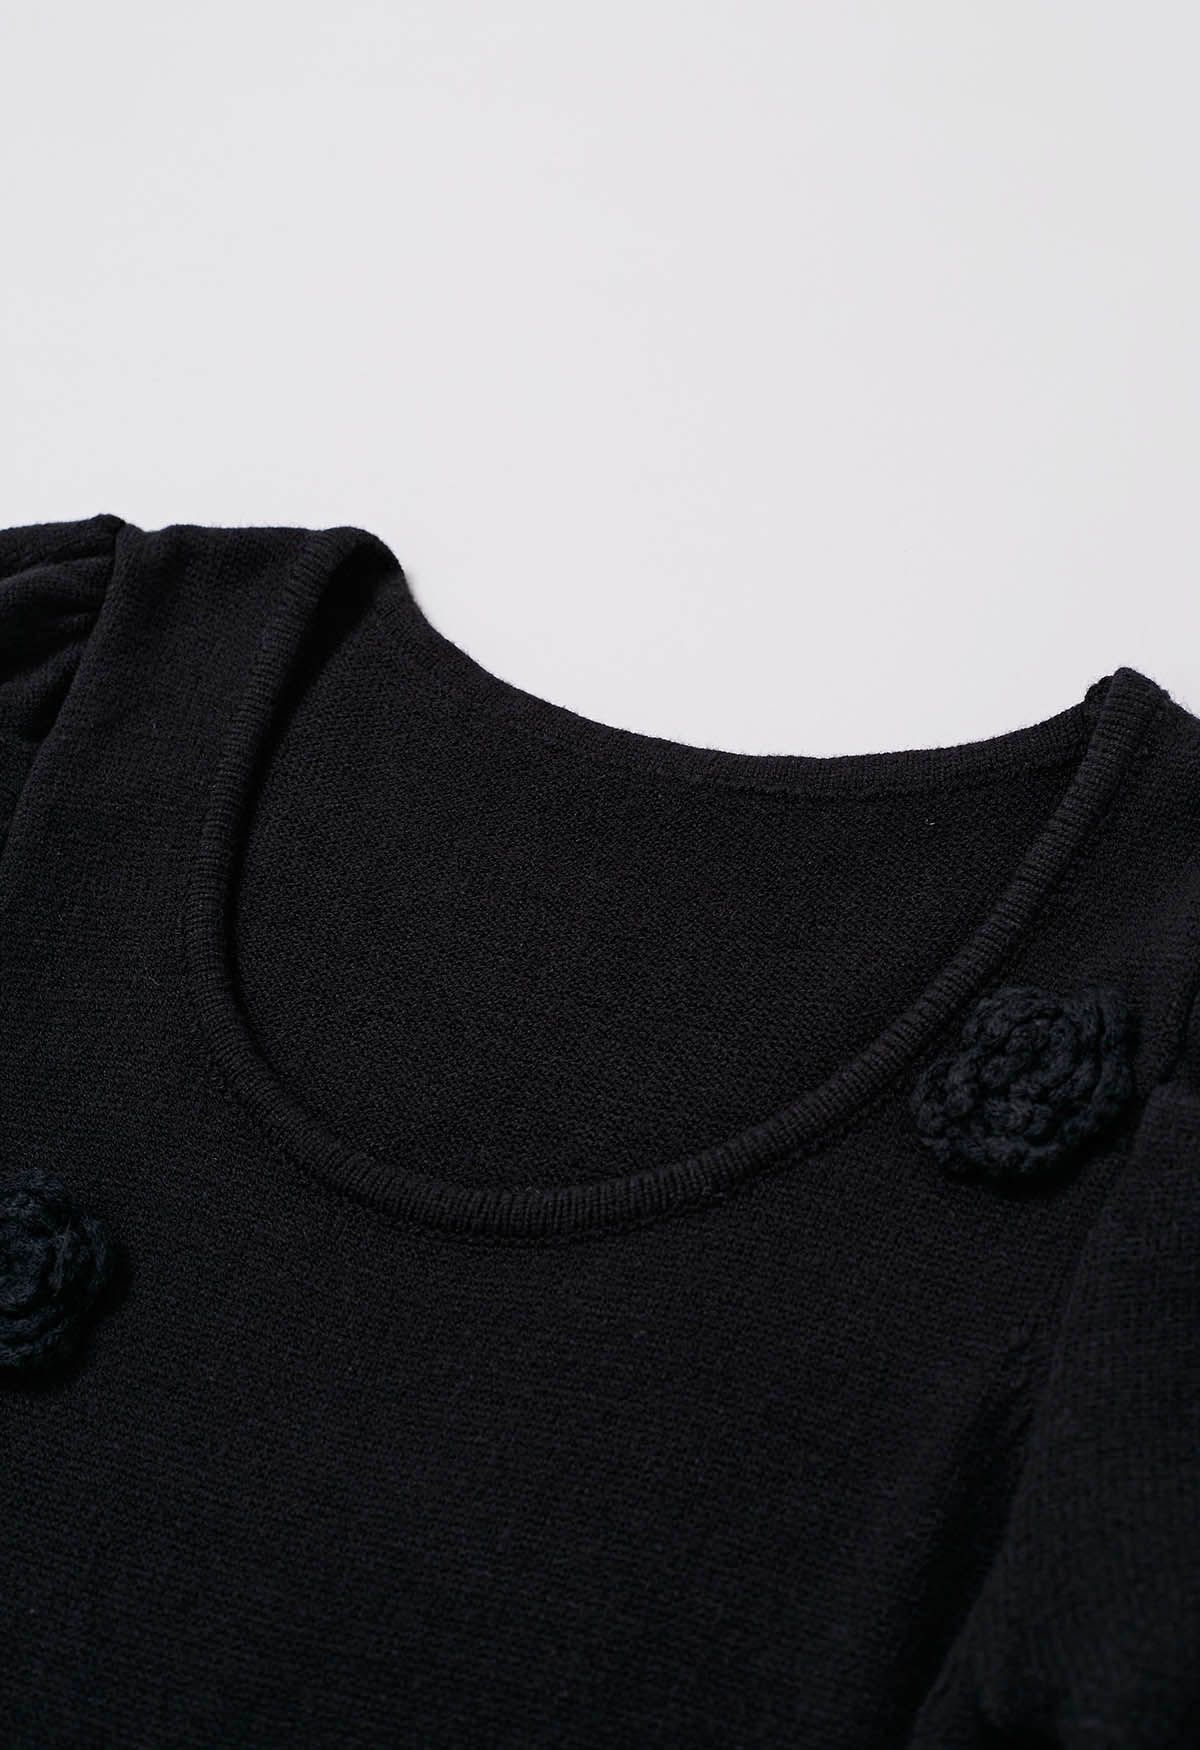 Scoop Neck Stitch Flower Knit Dress in Black